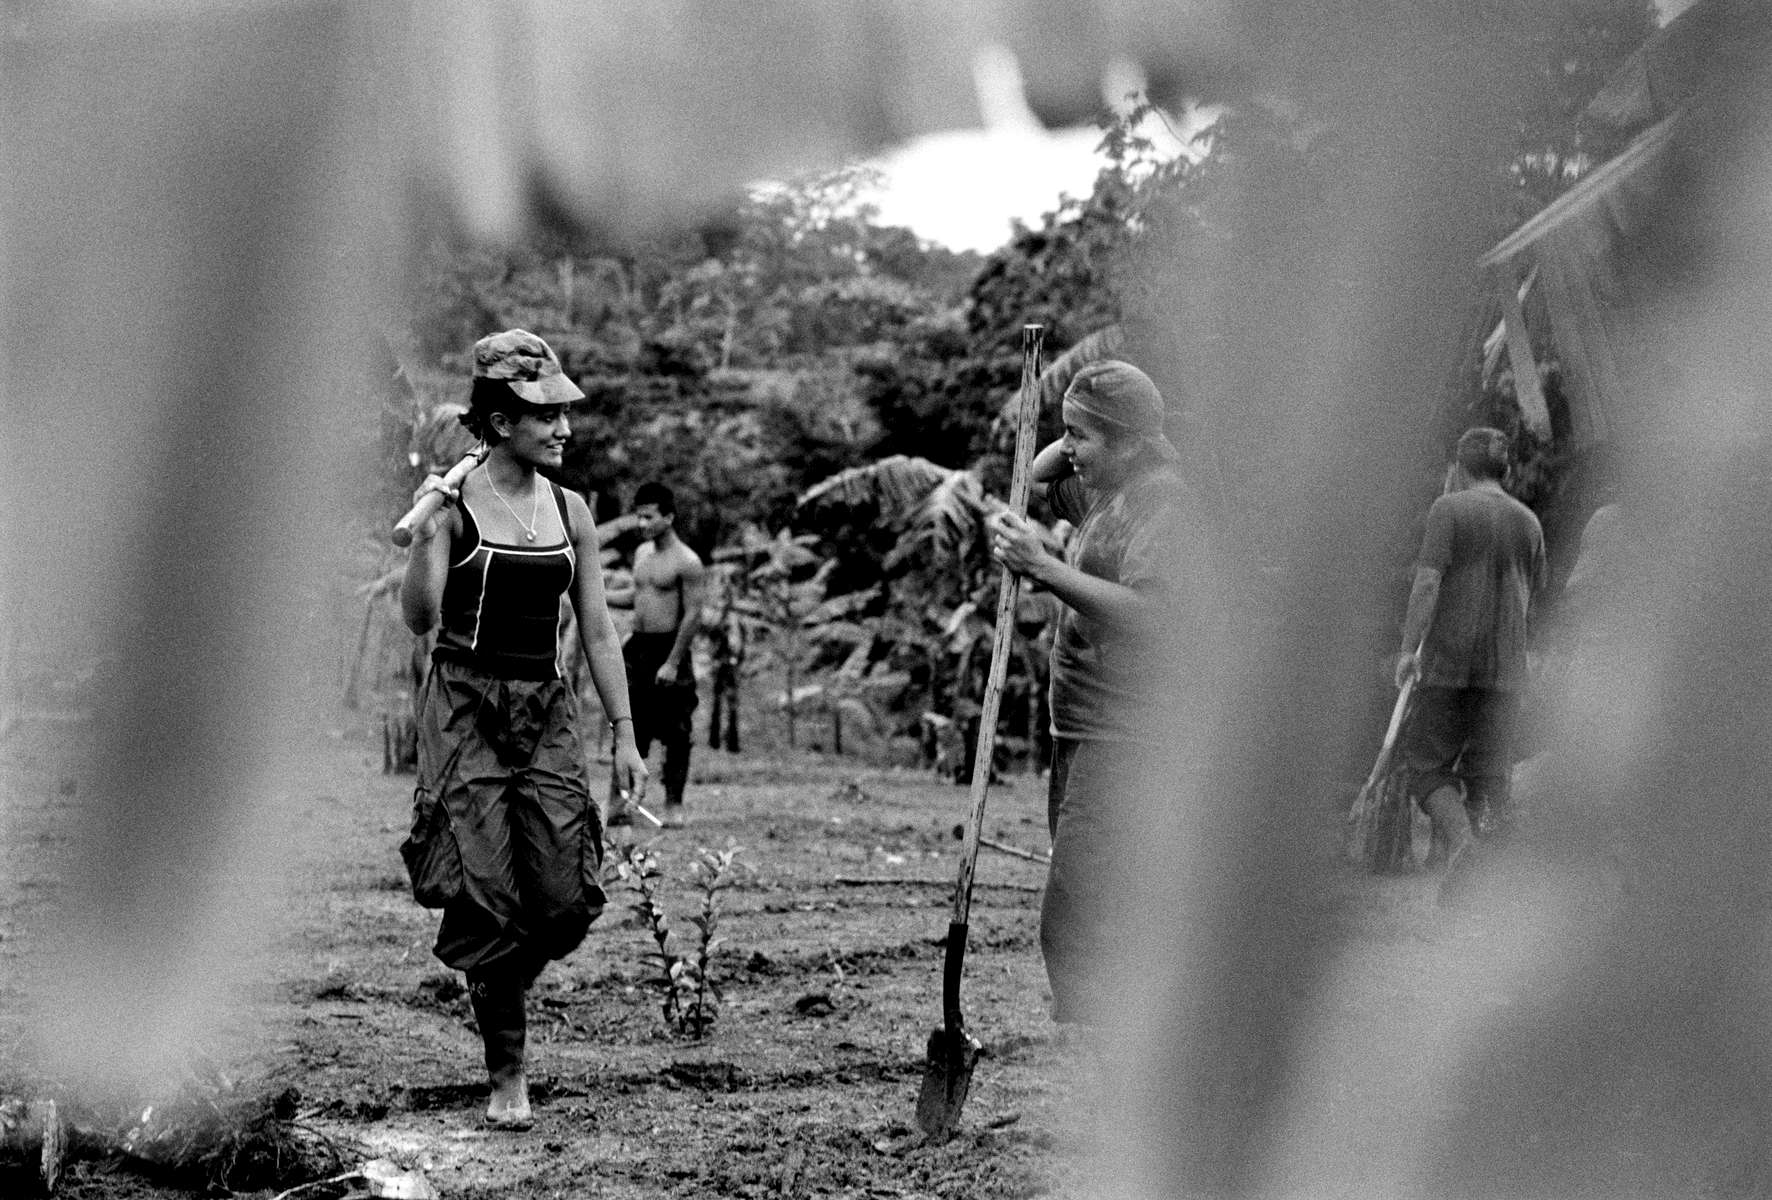 FARC working in the fields, Caqueta region, Colombia 2000